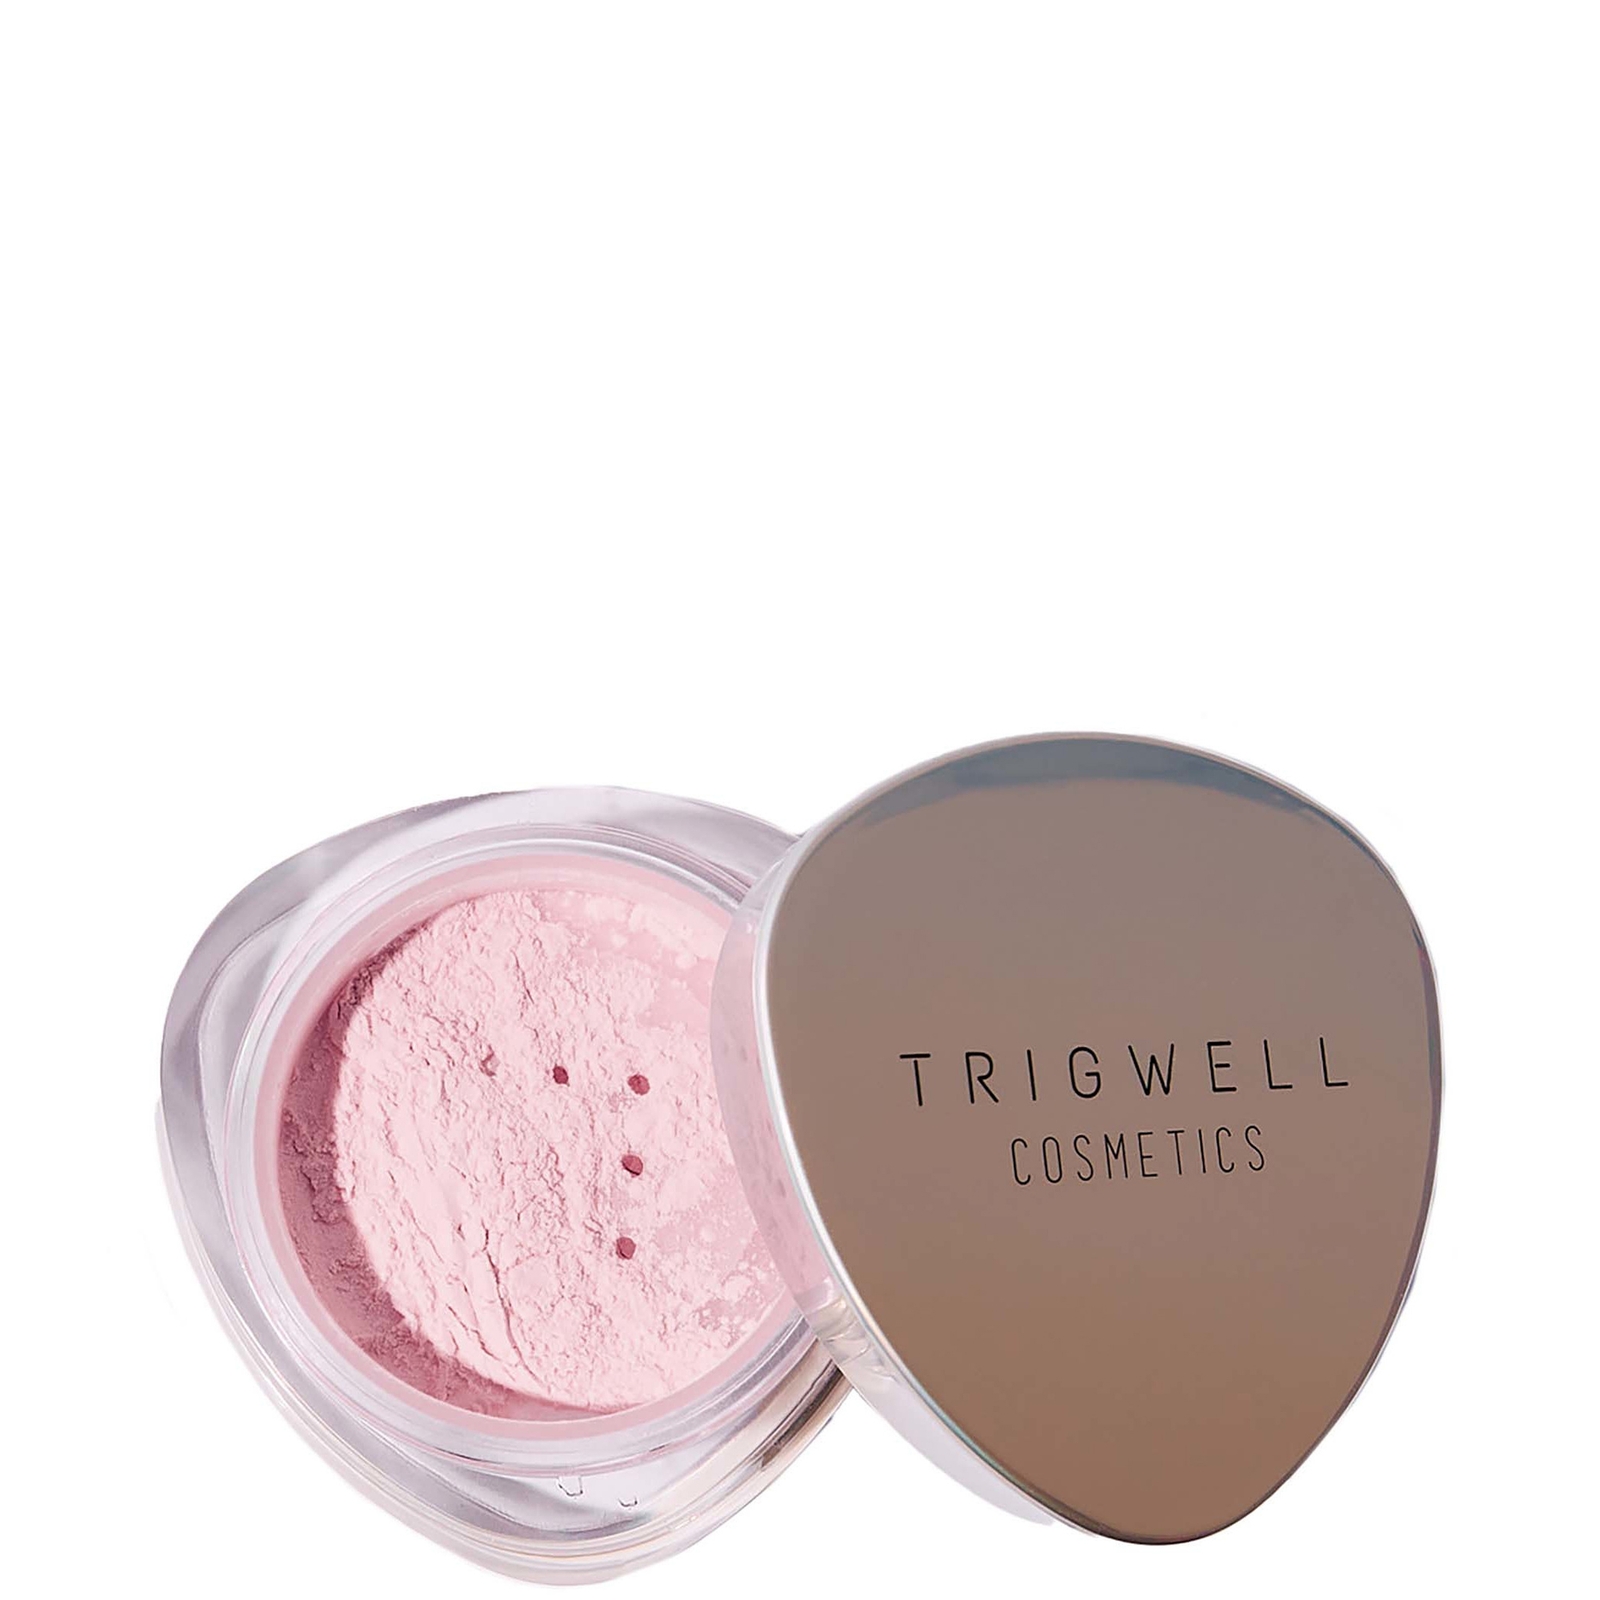 Trigwell Cosmetics Velvet Setting Powder 8g (Various Shades) - Pink